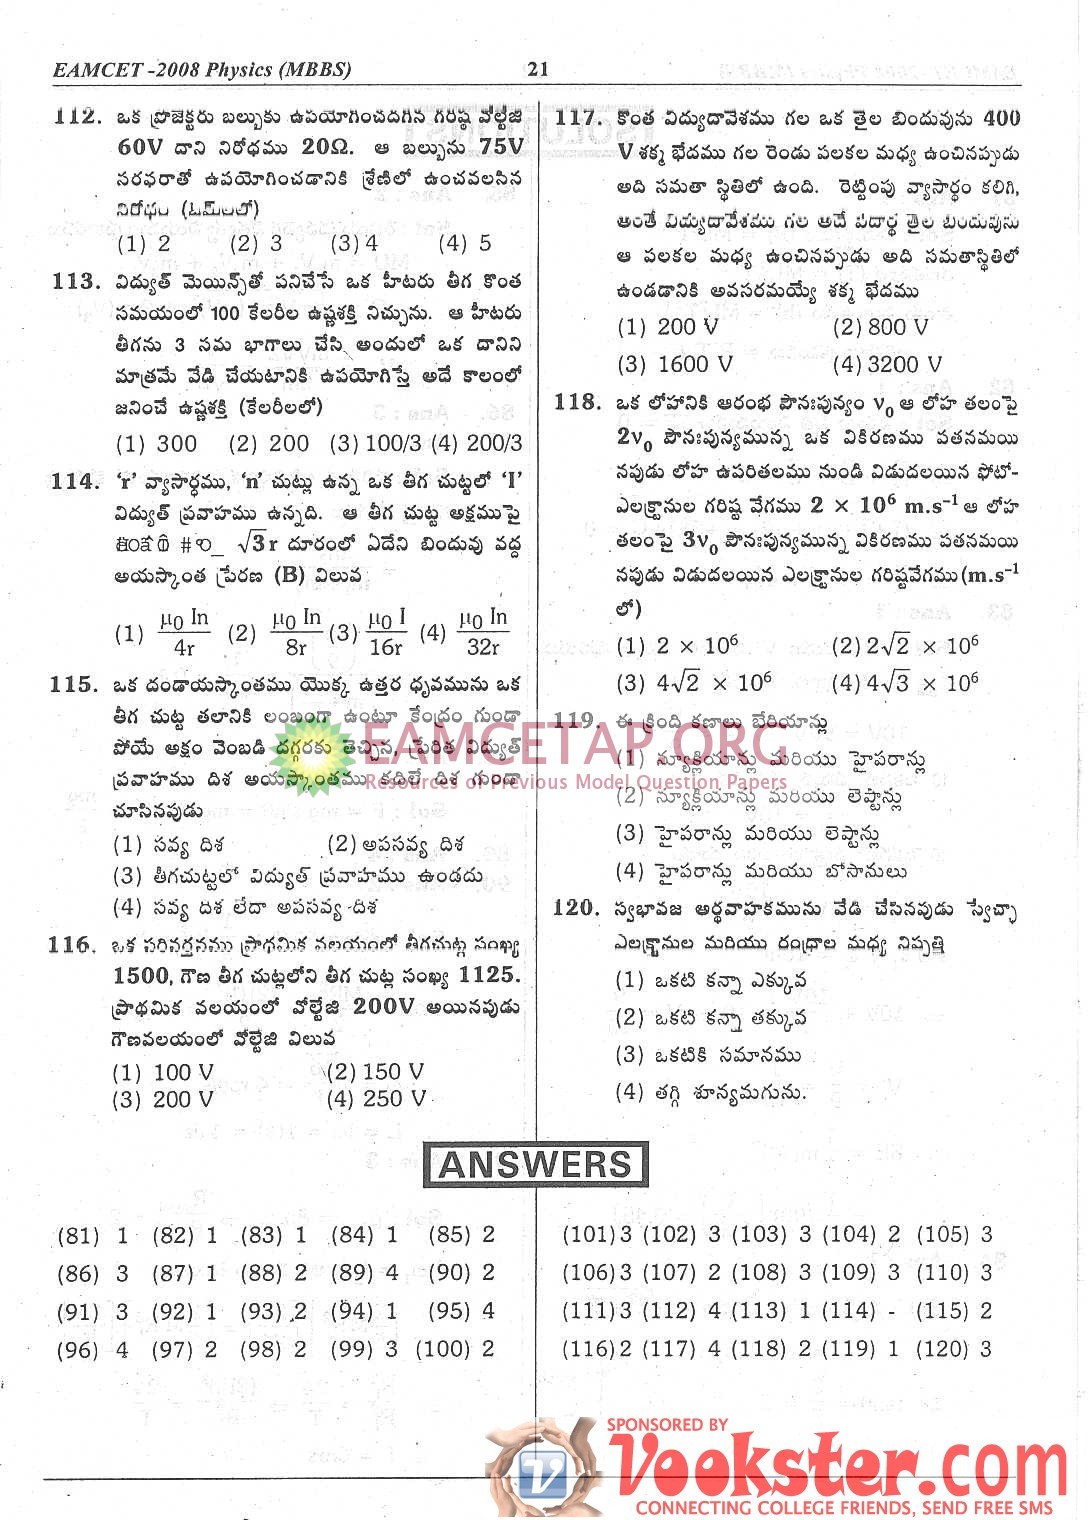 Eamcet Physics Formulas 99.pdf